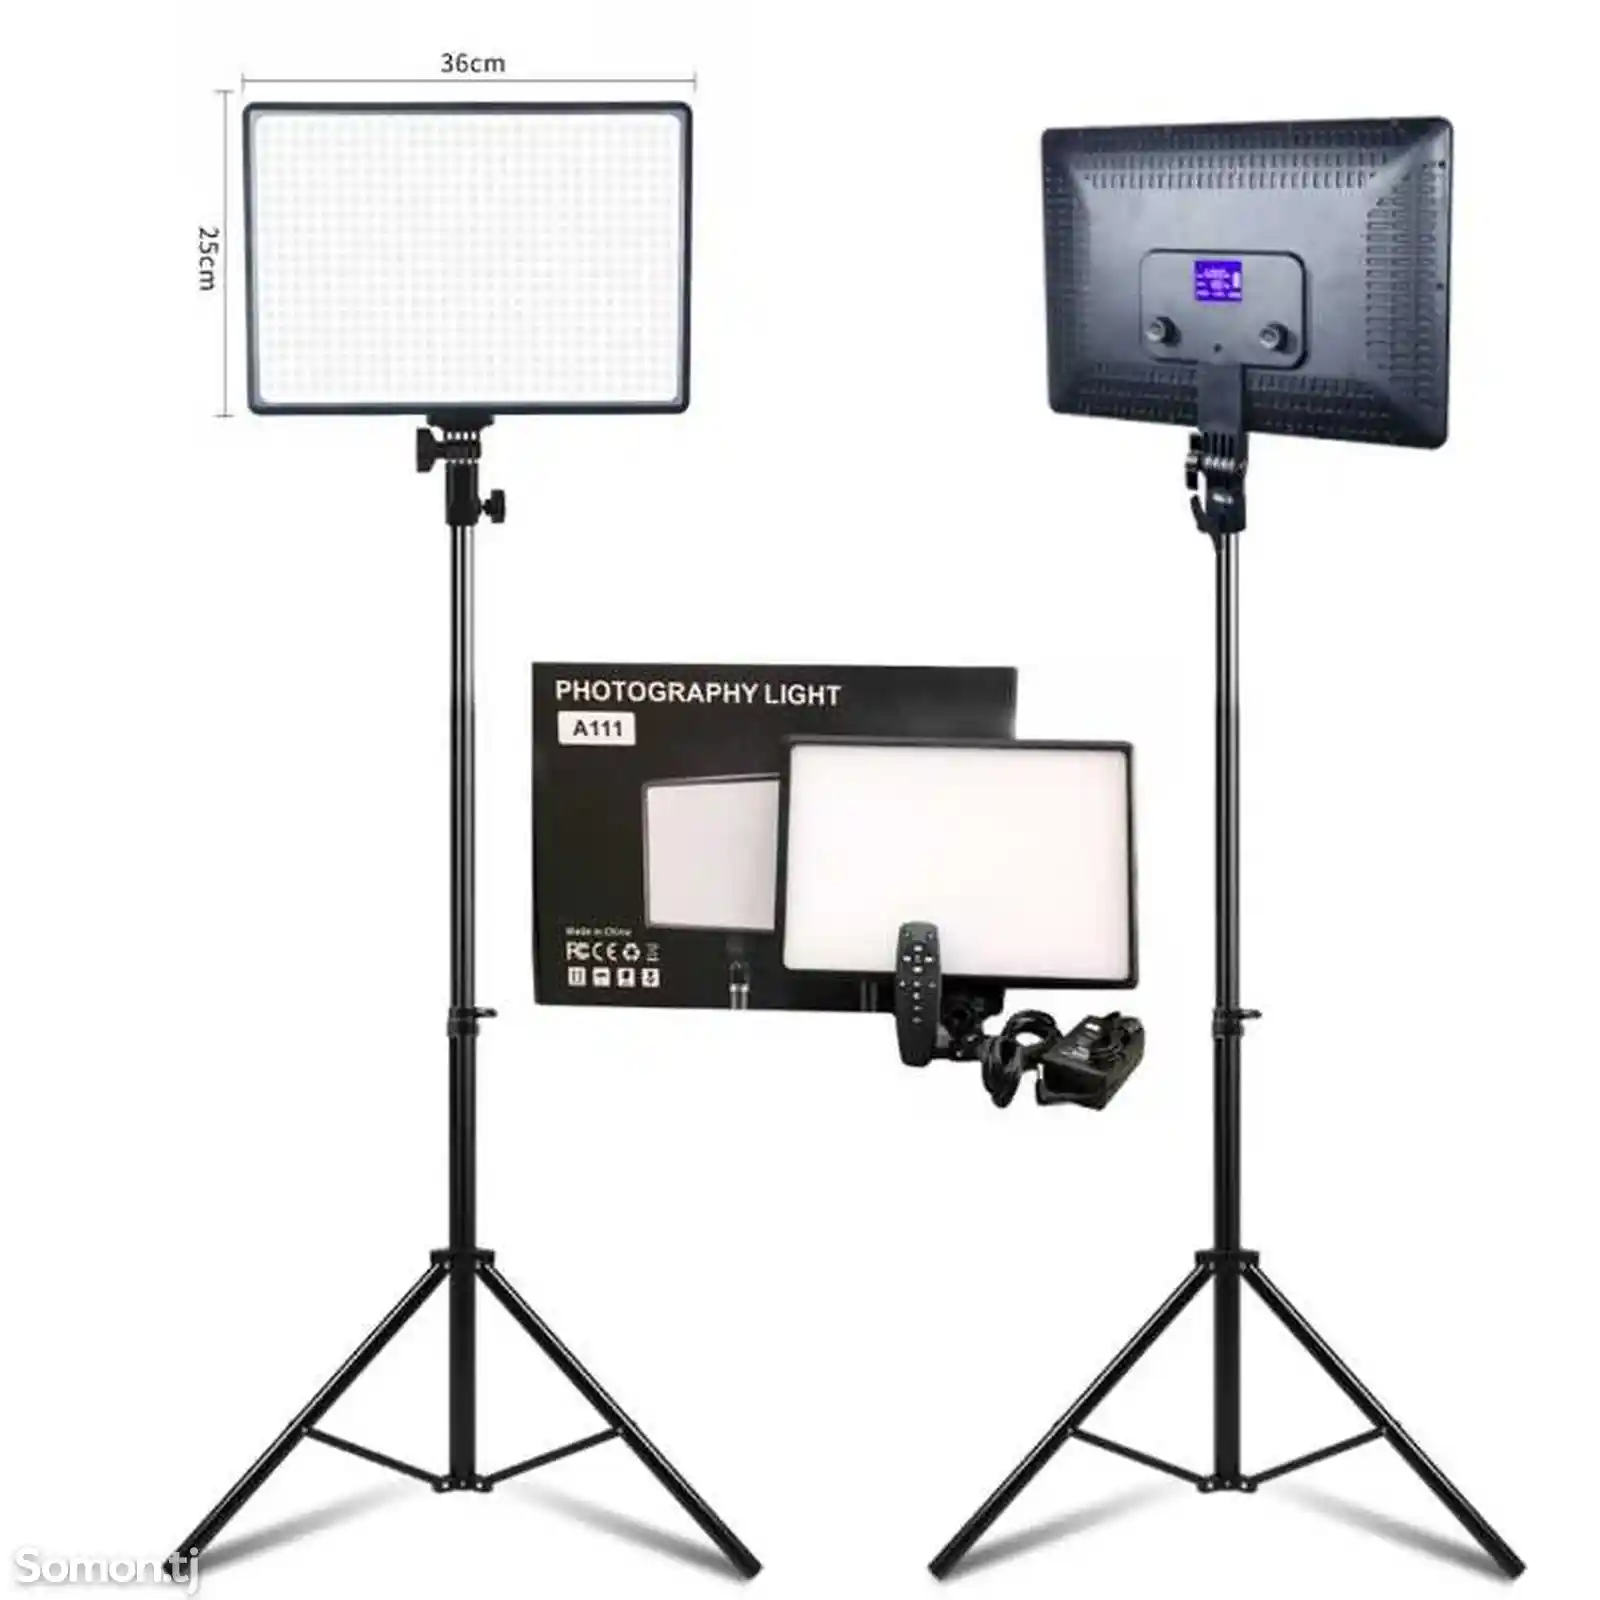 Профессиональная лампа Led Photography Light Pro A111 для фото и видео съёмки-3